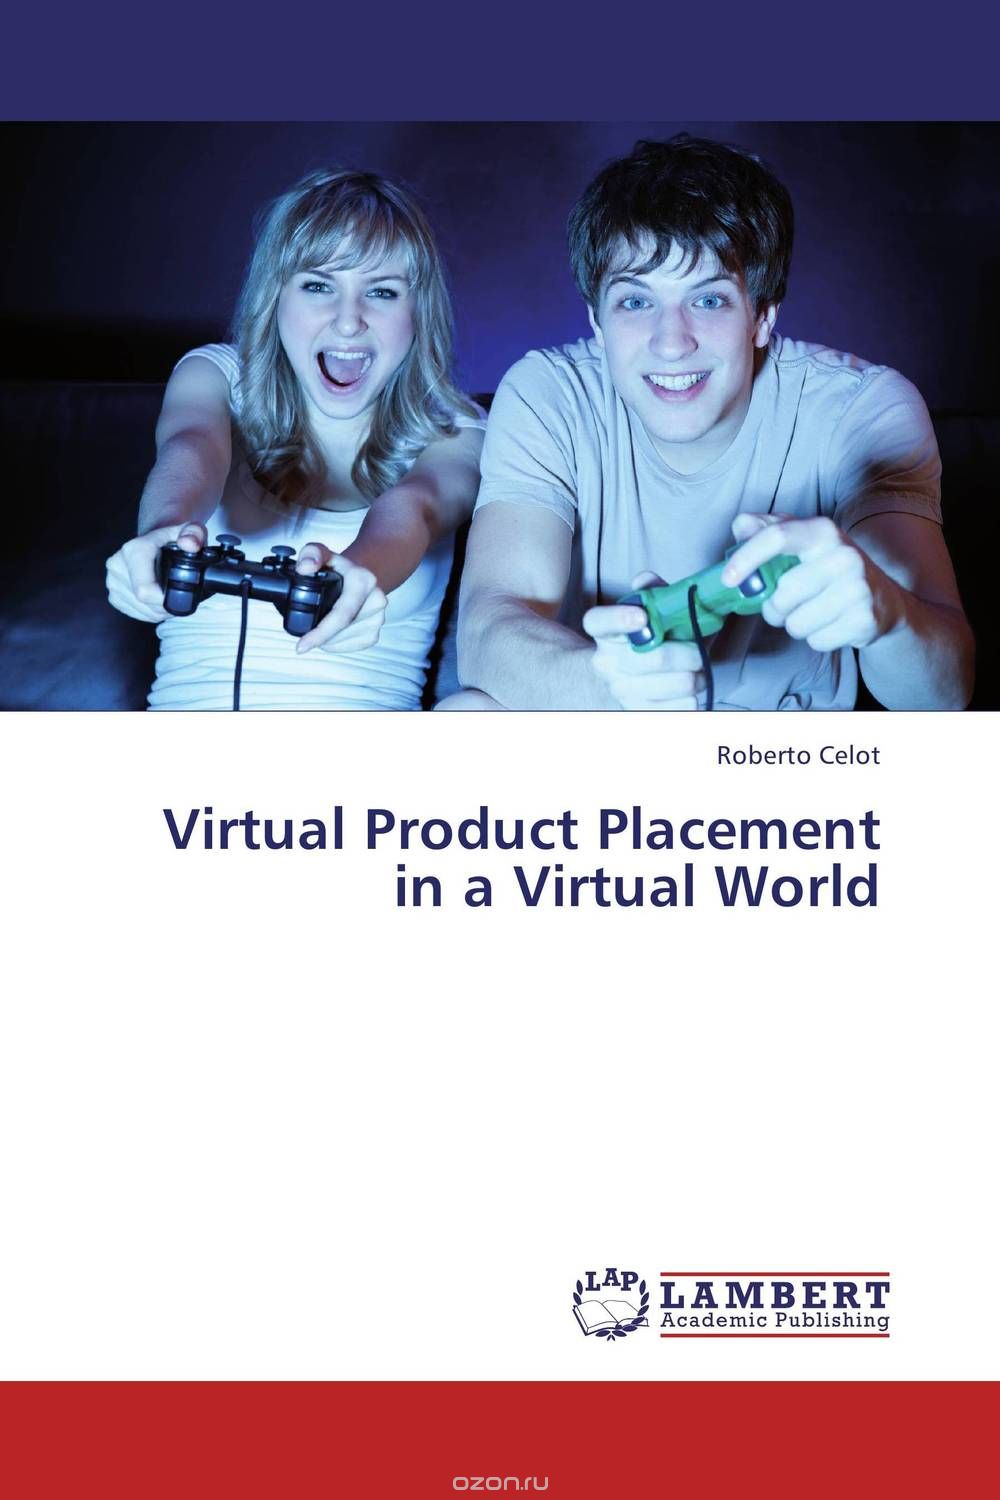 Скачать книгу "Virtual Product Placement in a Virtual World"